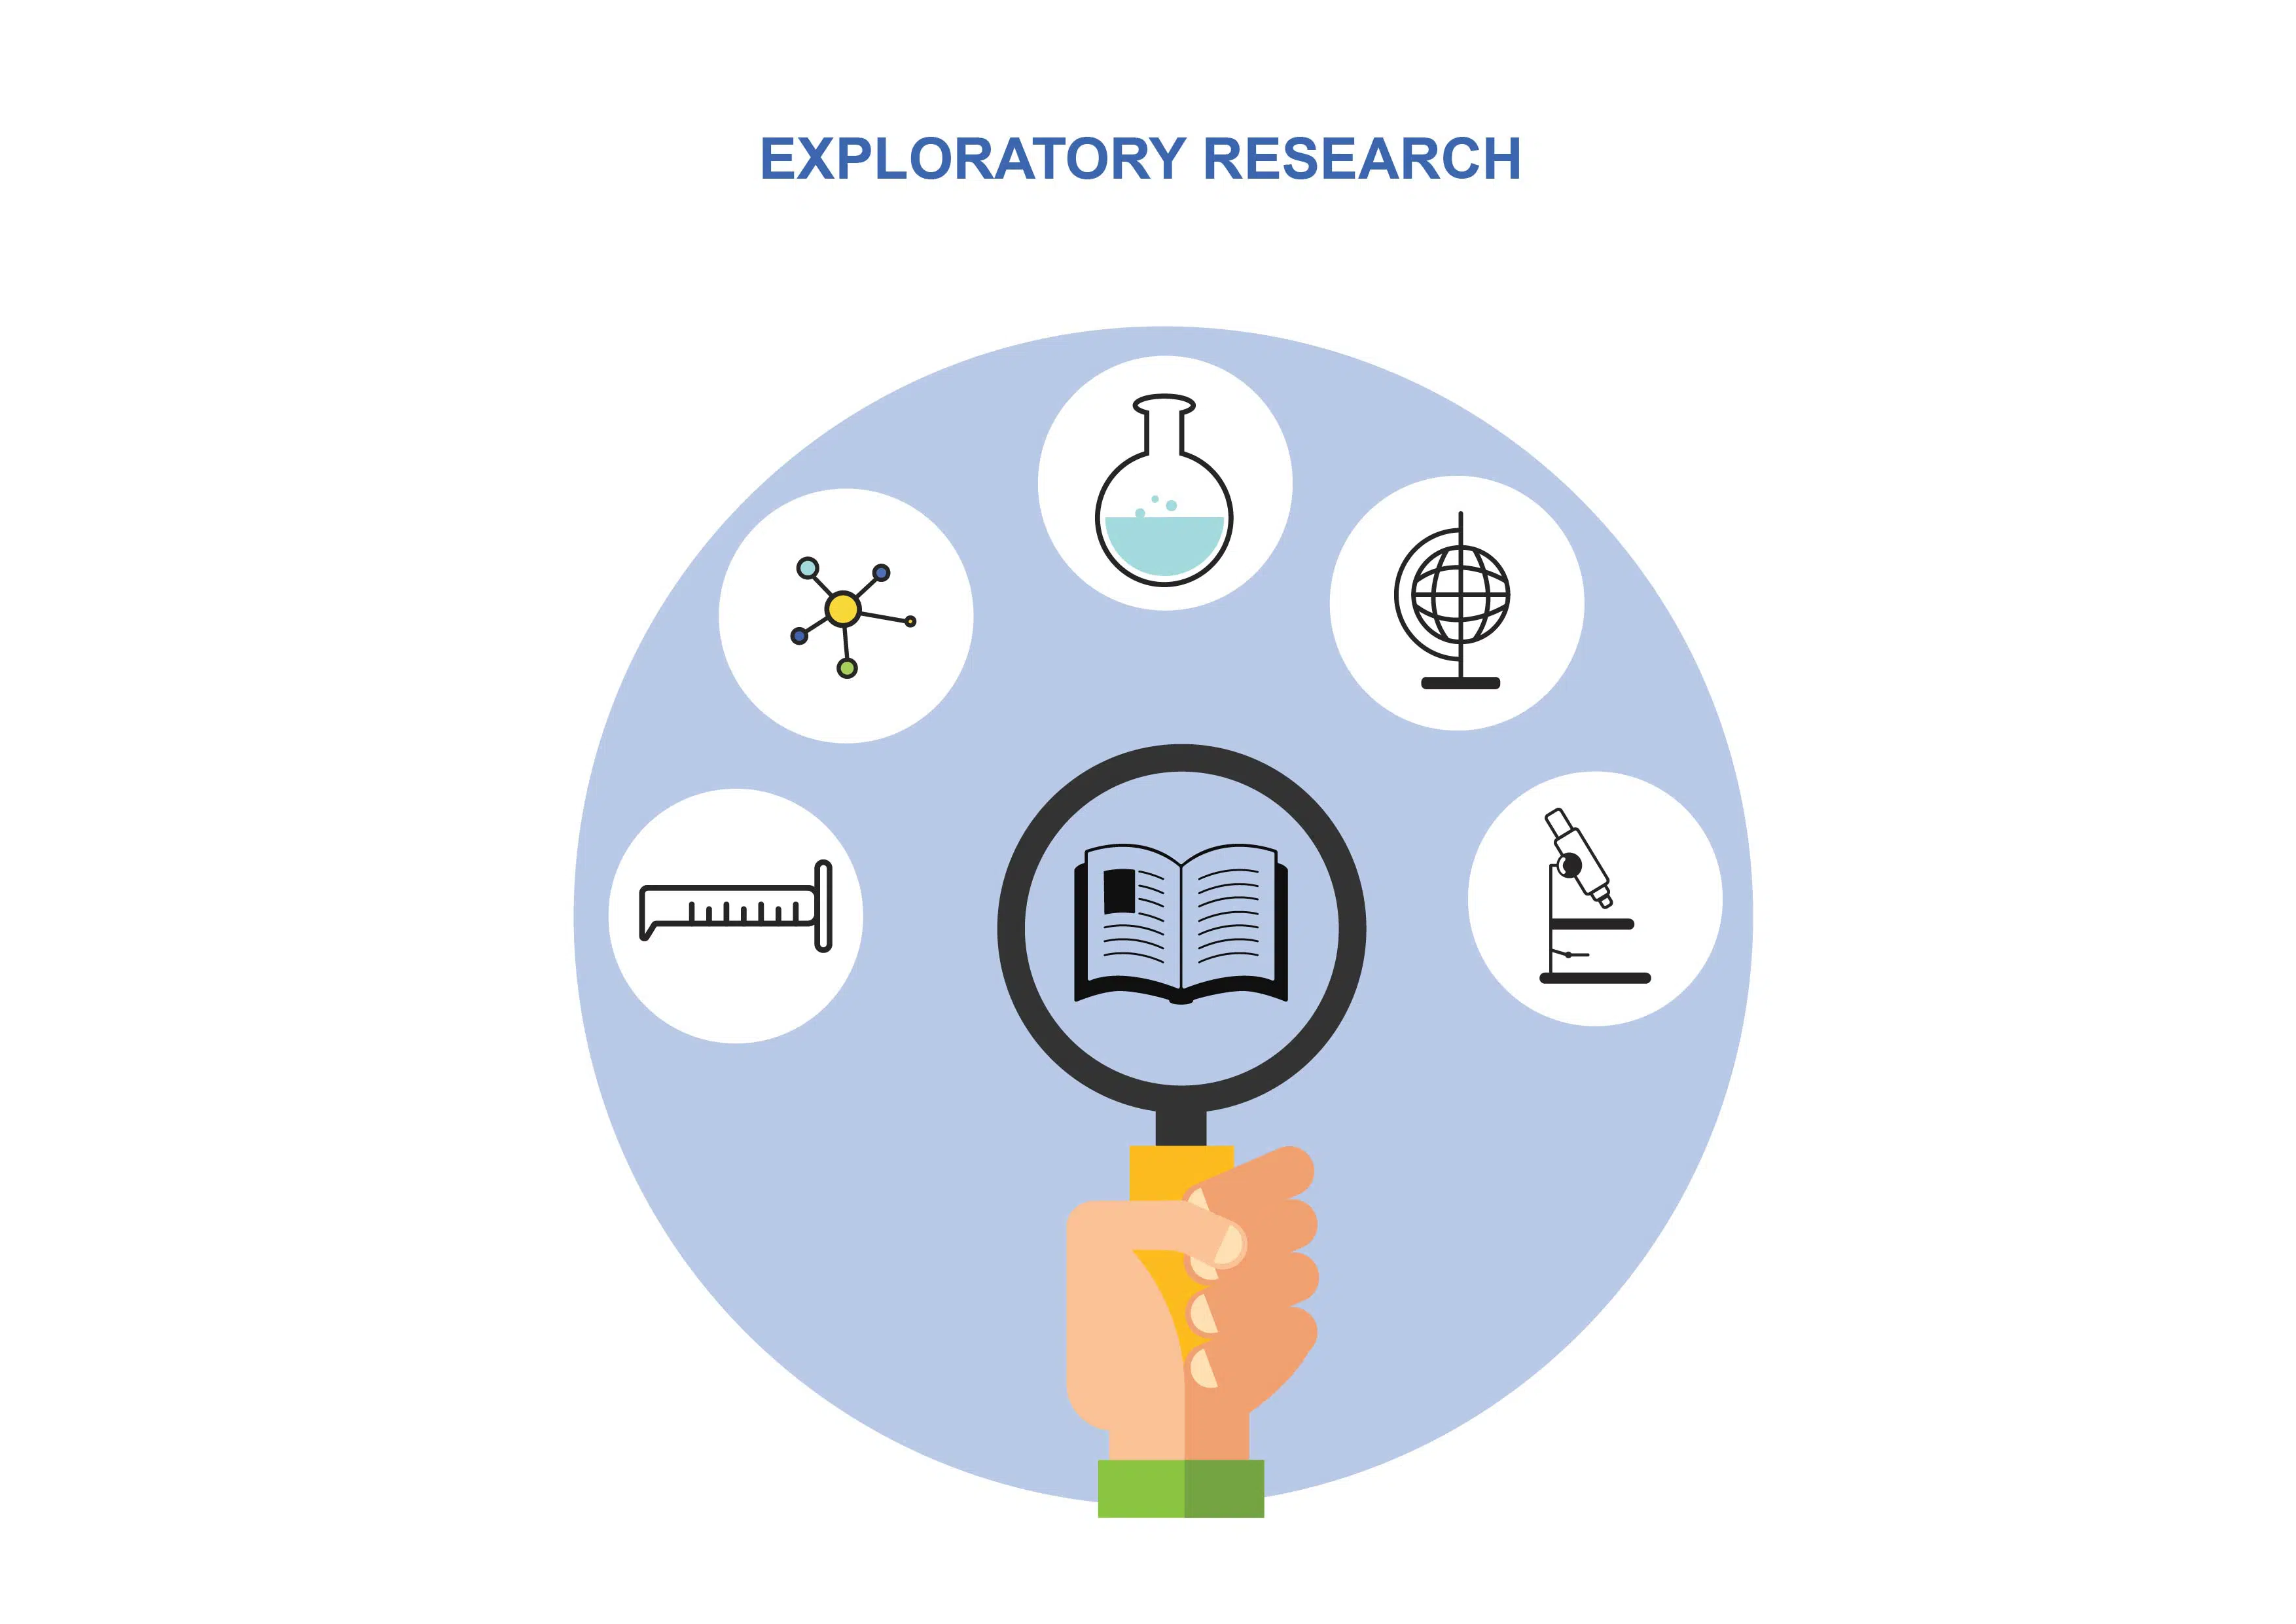 Exploratory Research vs Explanatory Research member experience surveys